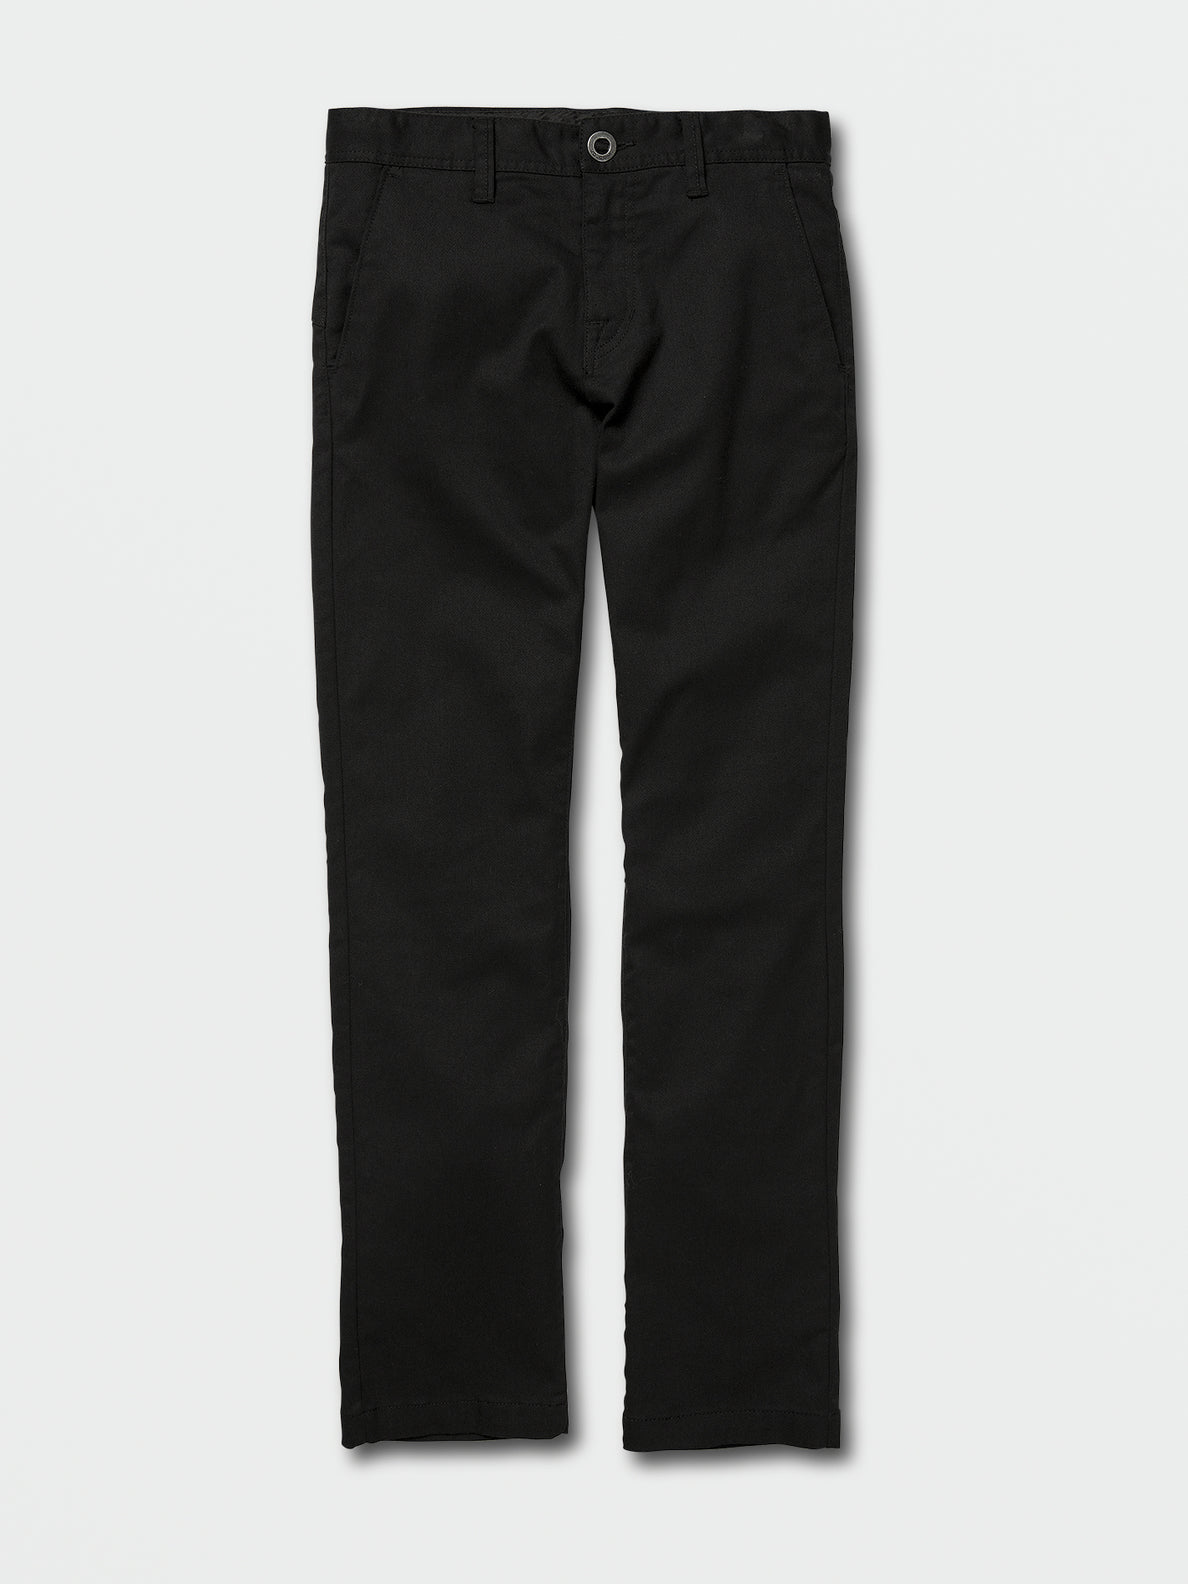 Big Boys Frickin Modern Stretch Pants - Black (C1112306_BLK) [F]